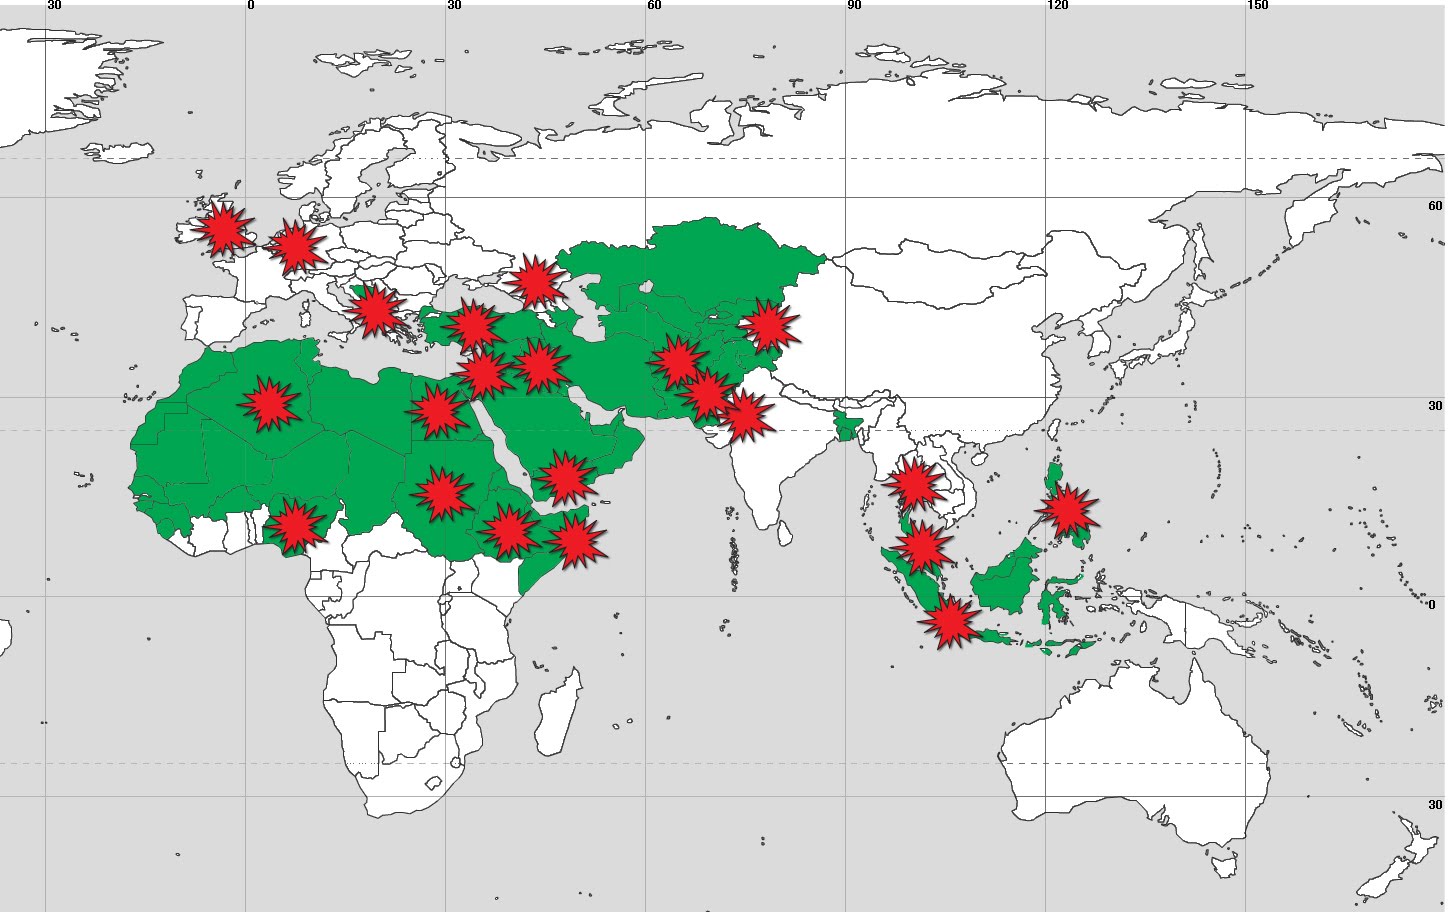 http://2.bp.blogspot.com/_dlpJ9dM6yfE/S-rxfQdISuI/AAAAAAAAAuI/0Ygc5MExl4g/s1600/Muslim+World+Map.jpg